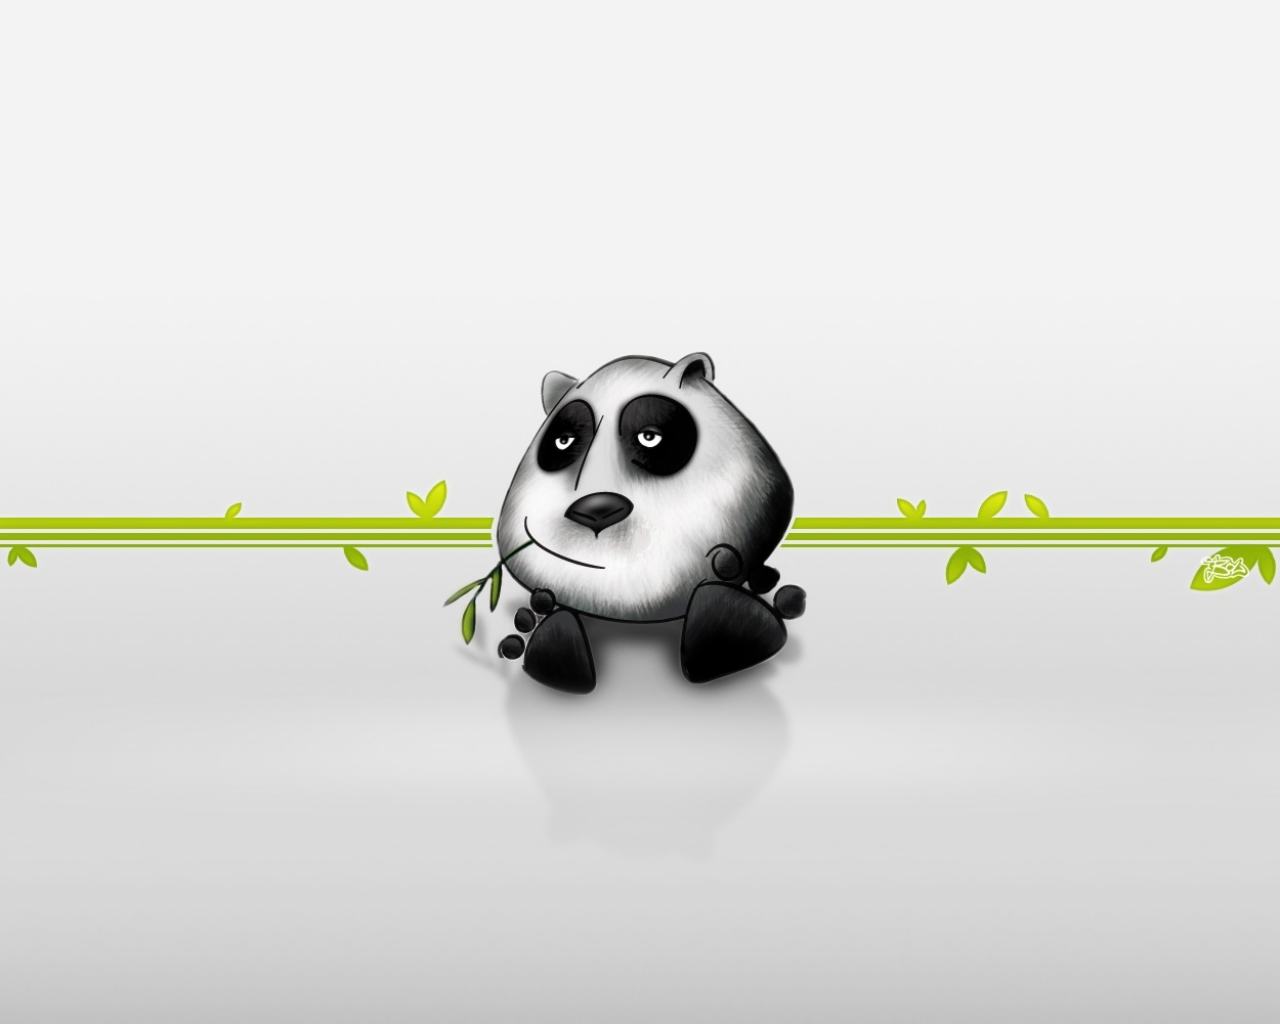 Cool Cartoon Panda Wallpaper Pictures For Desktop